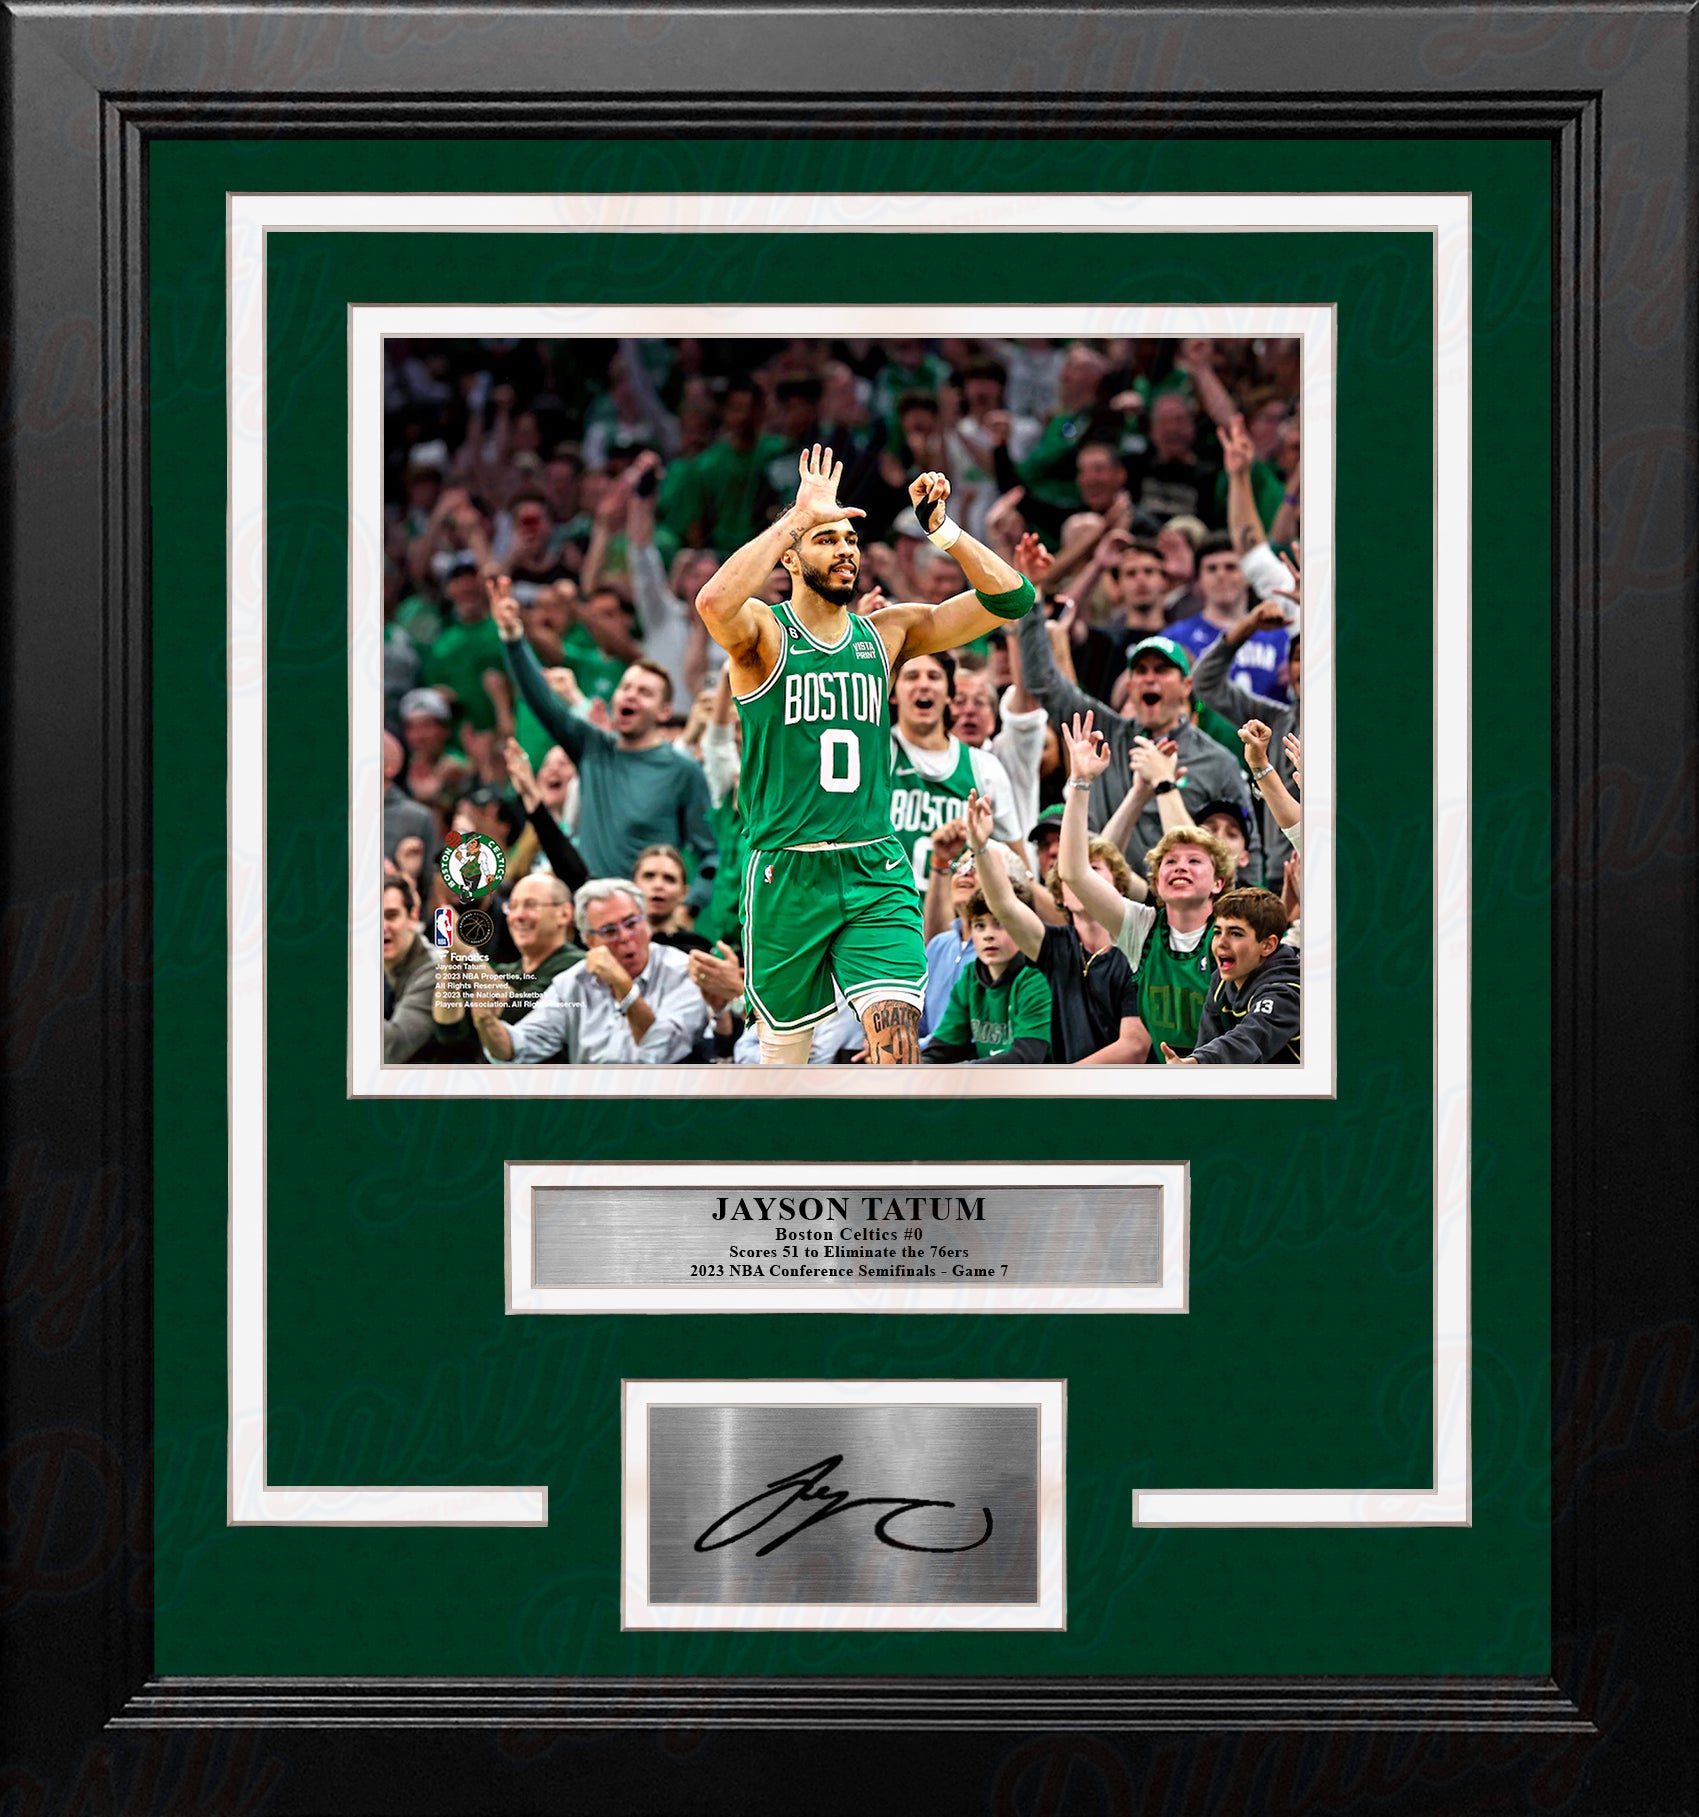 Jayson Tatum 51-Point Game 7 Boston Celtics 8" x 10" Framed Basketball Photo with Engraved Autograph - Dynasty Sports & Framing 